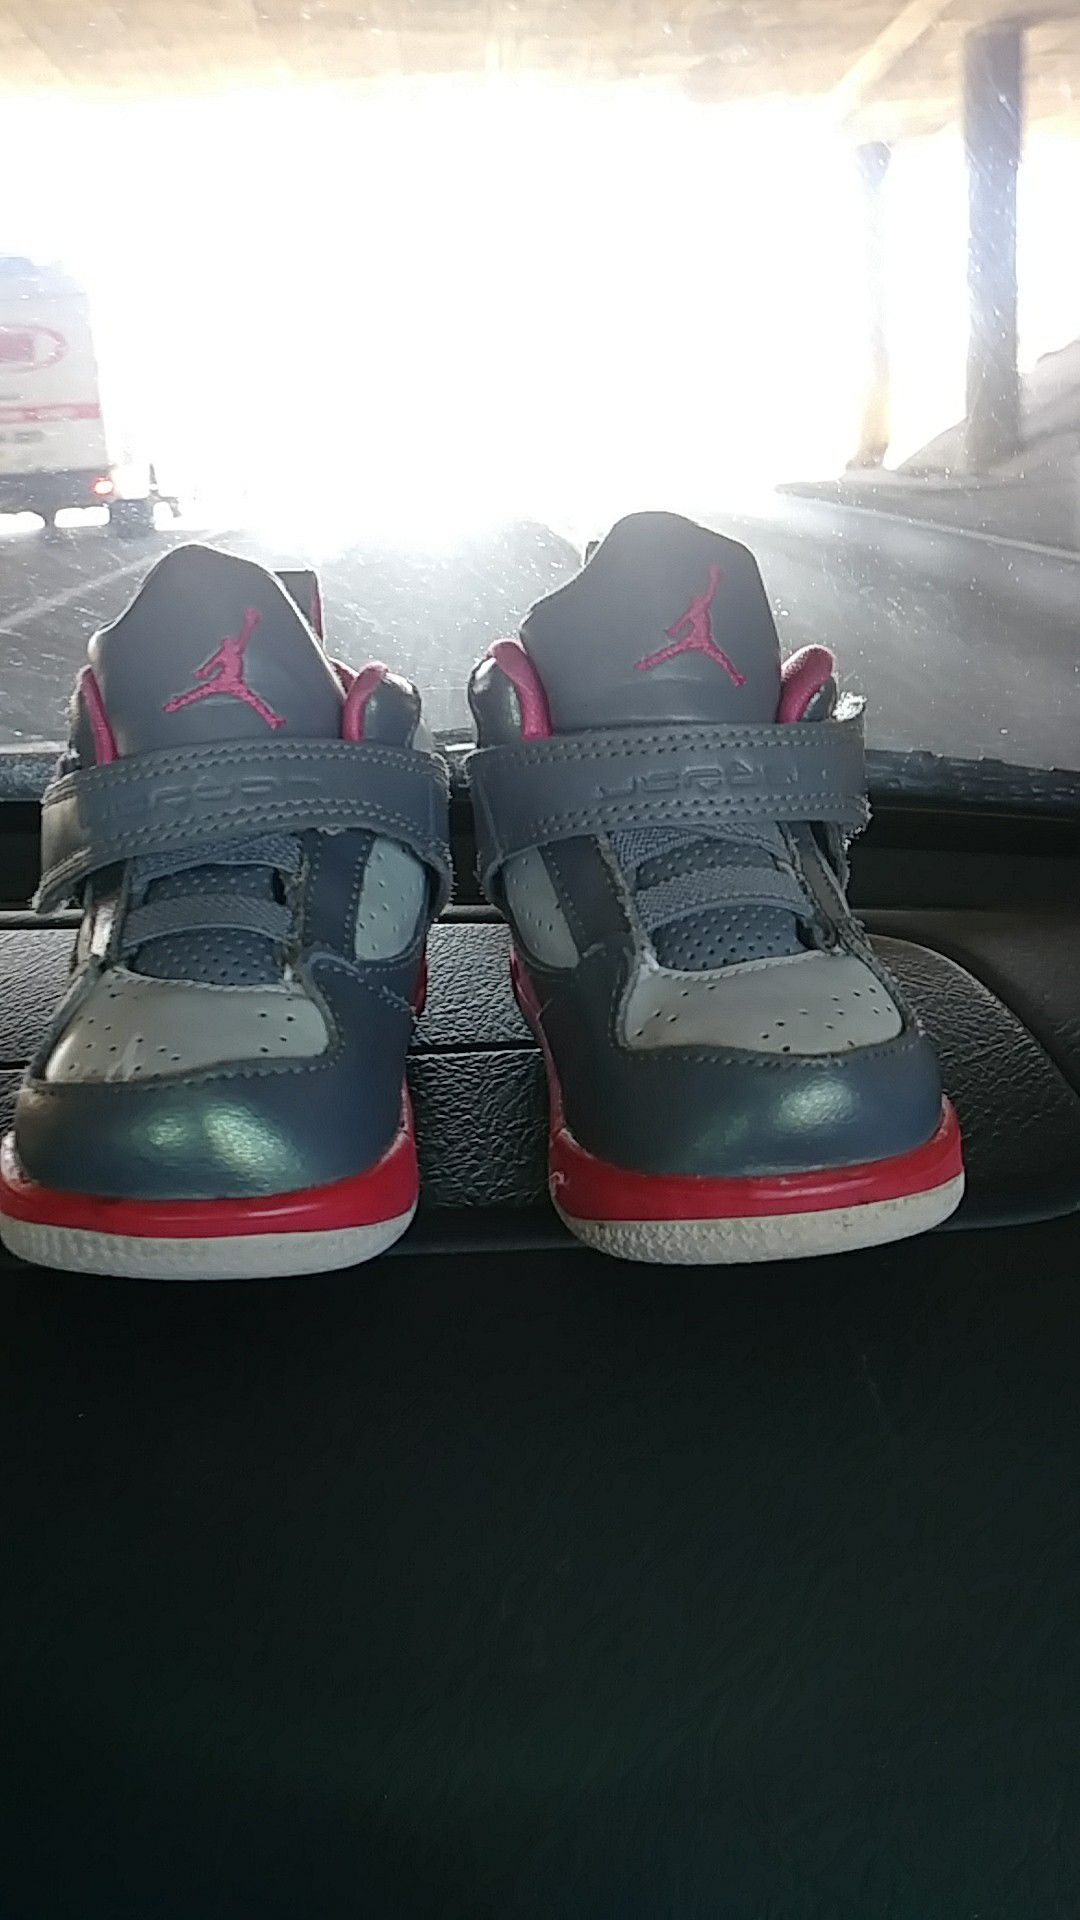 All Size 6c- 1 pair Jordans 1 pair nike air max